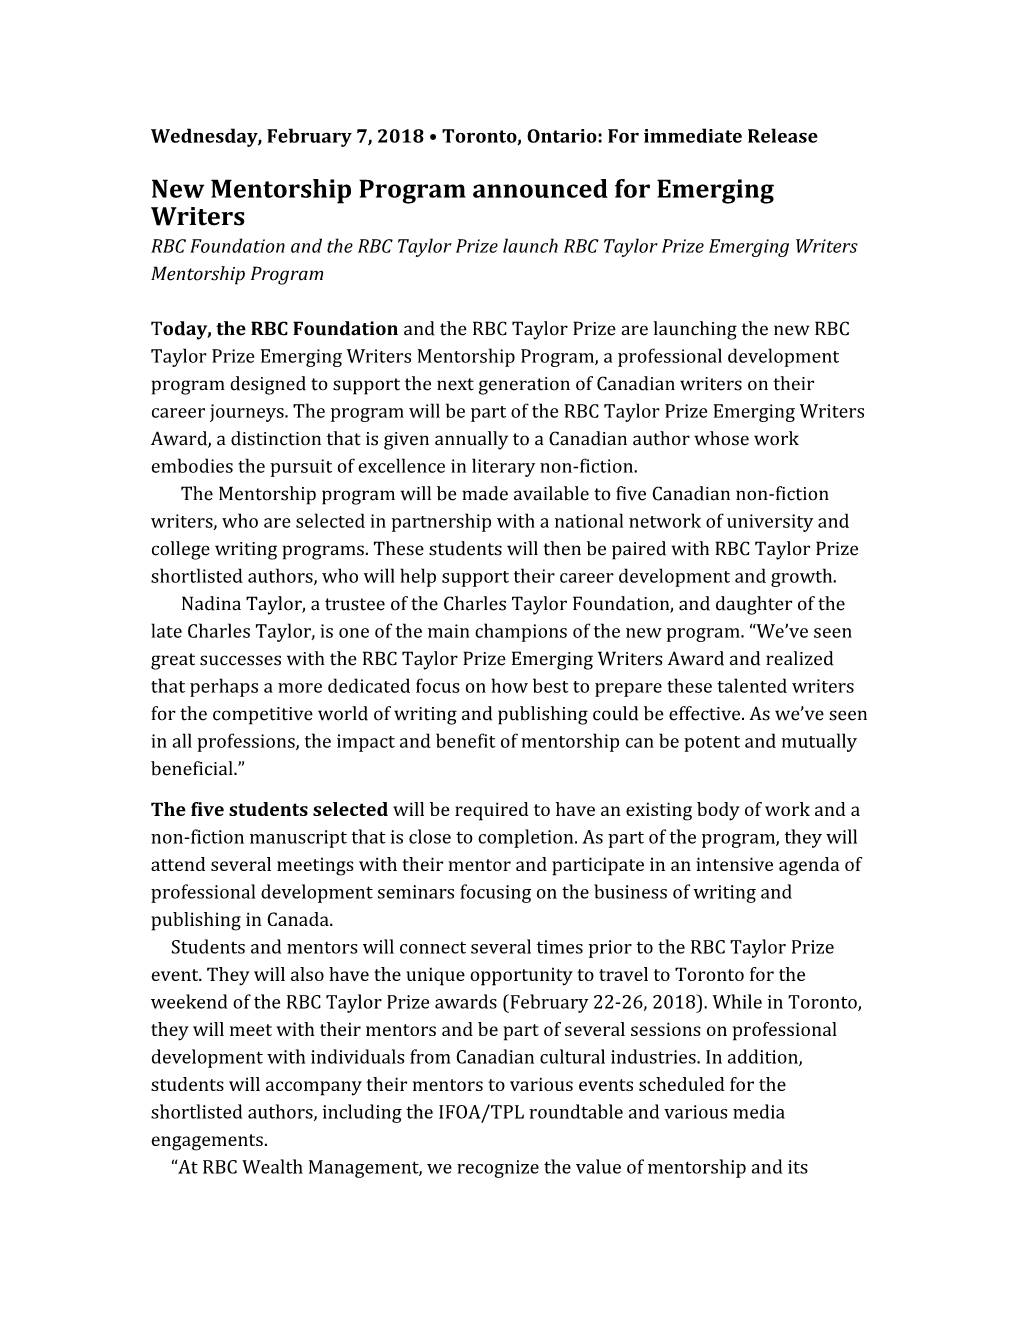 New Mentorship Program Announced for Emerging Writers